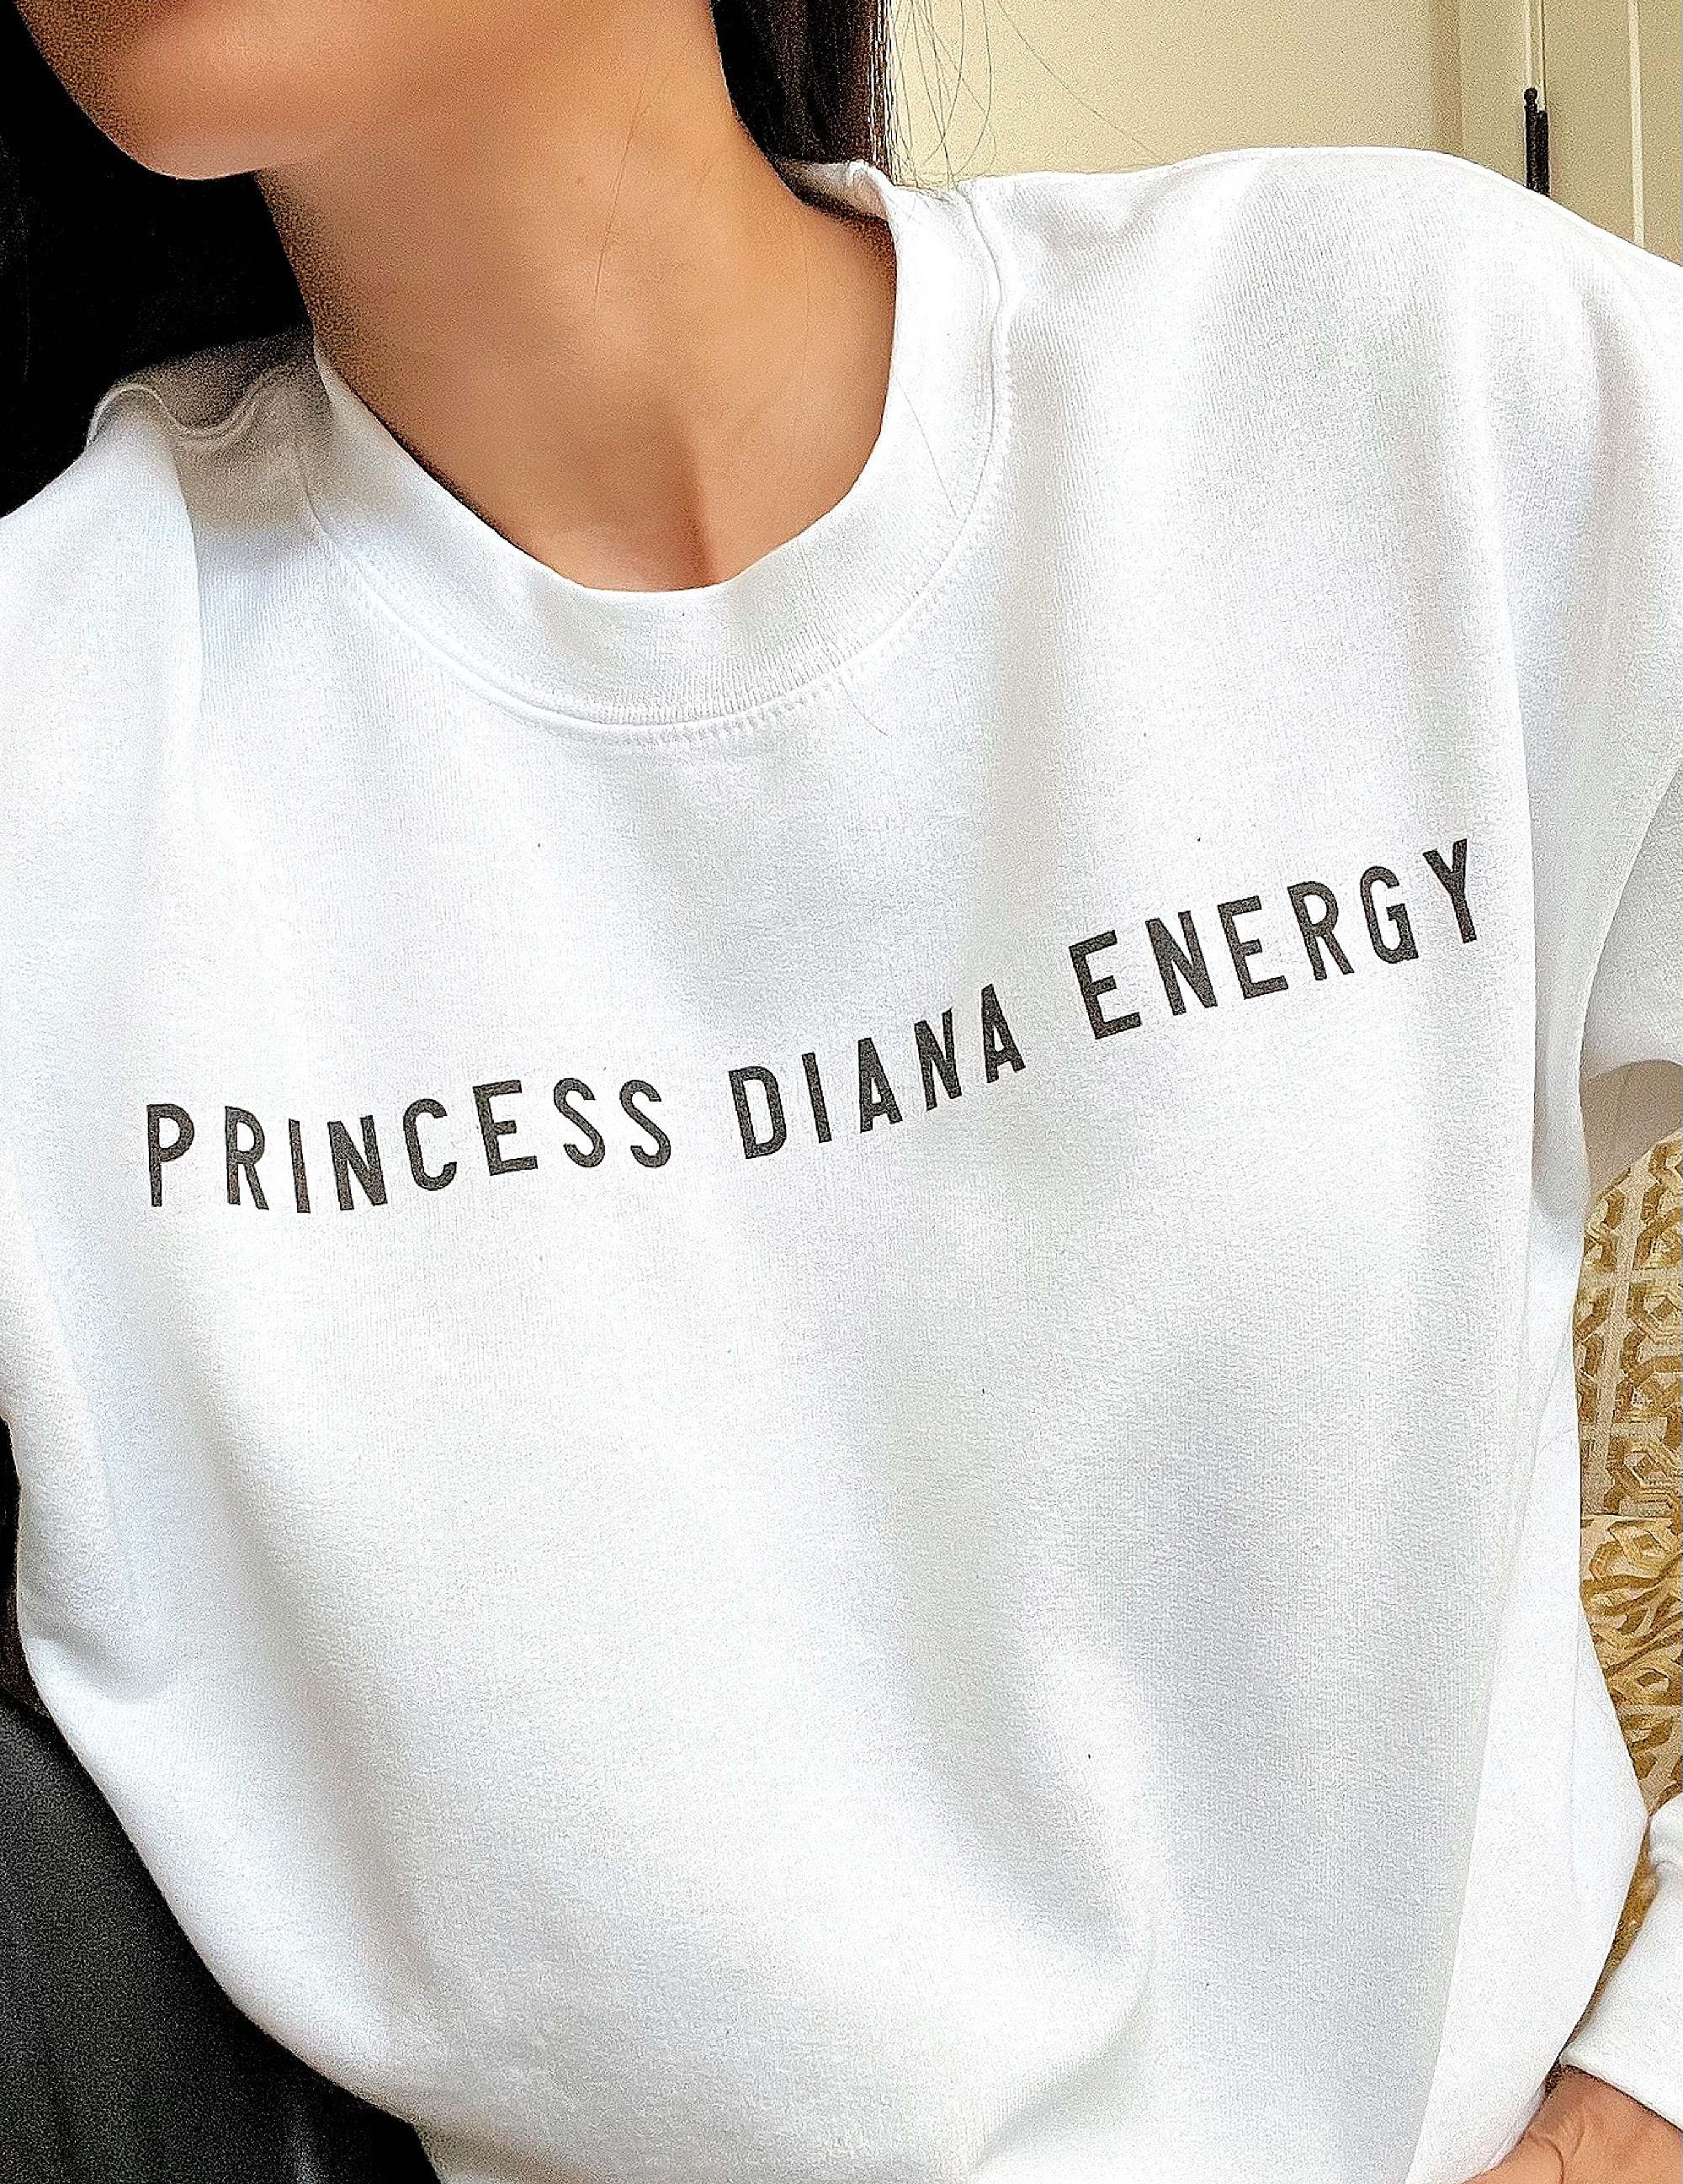 Diana Elizabeth blog - wearing princess Diana energy sweatshirt, blog post about Diana sweatshirts